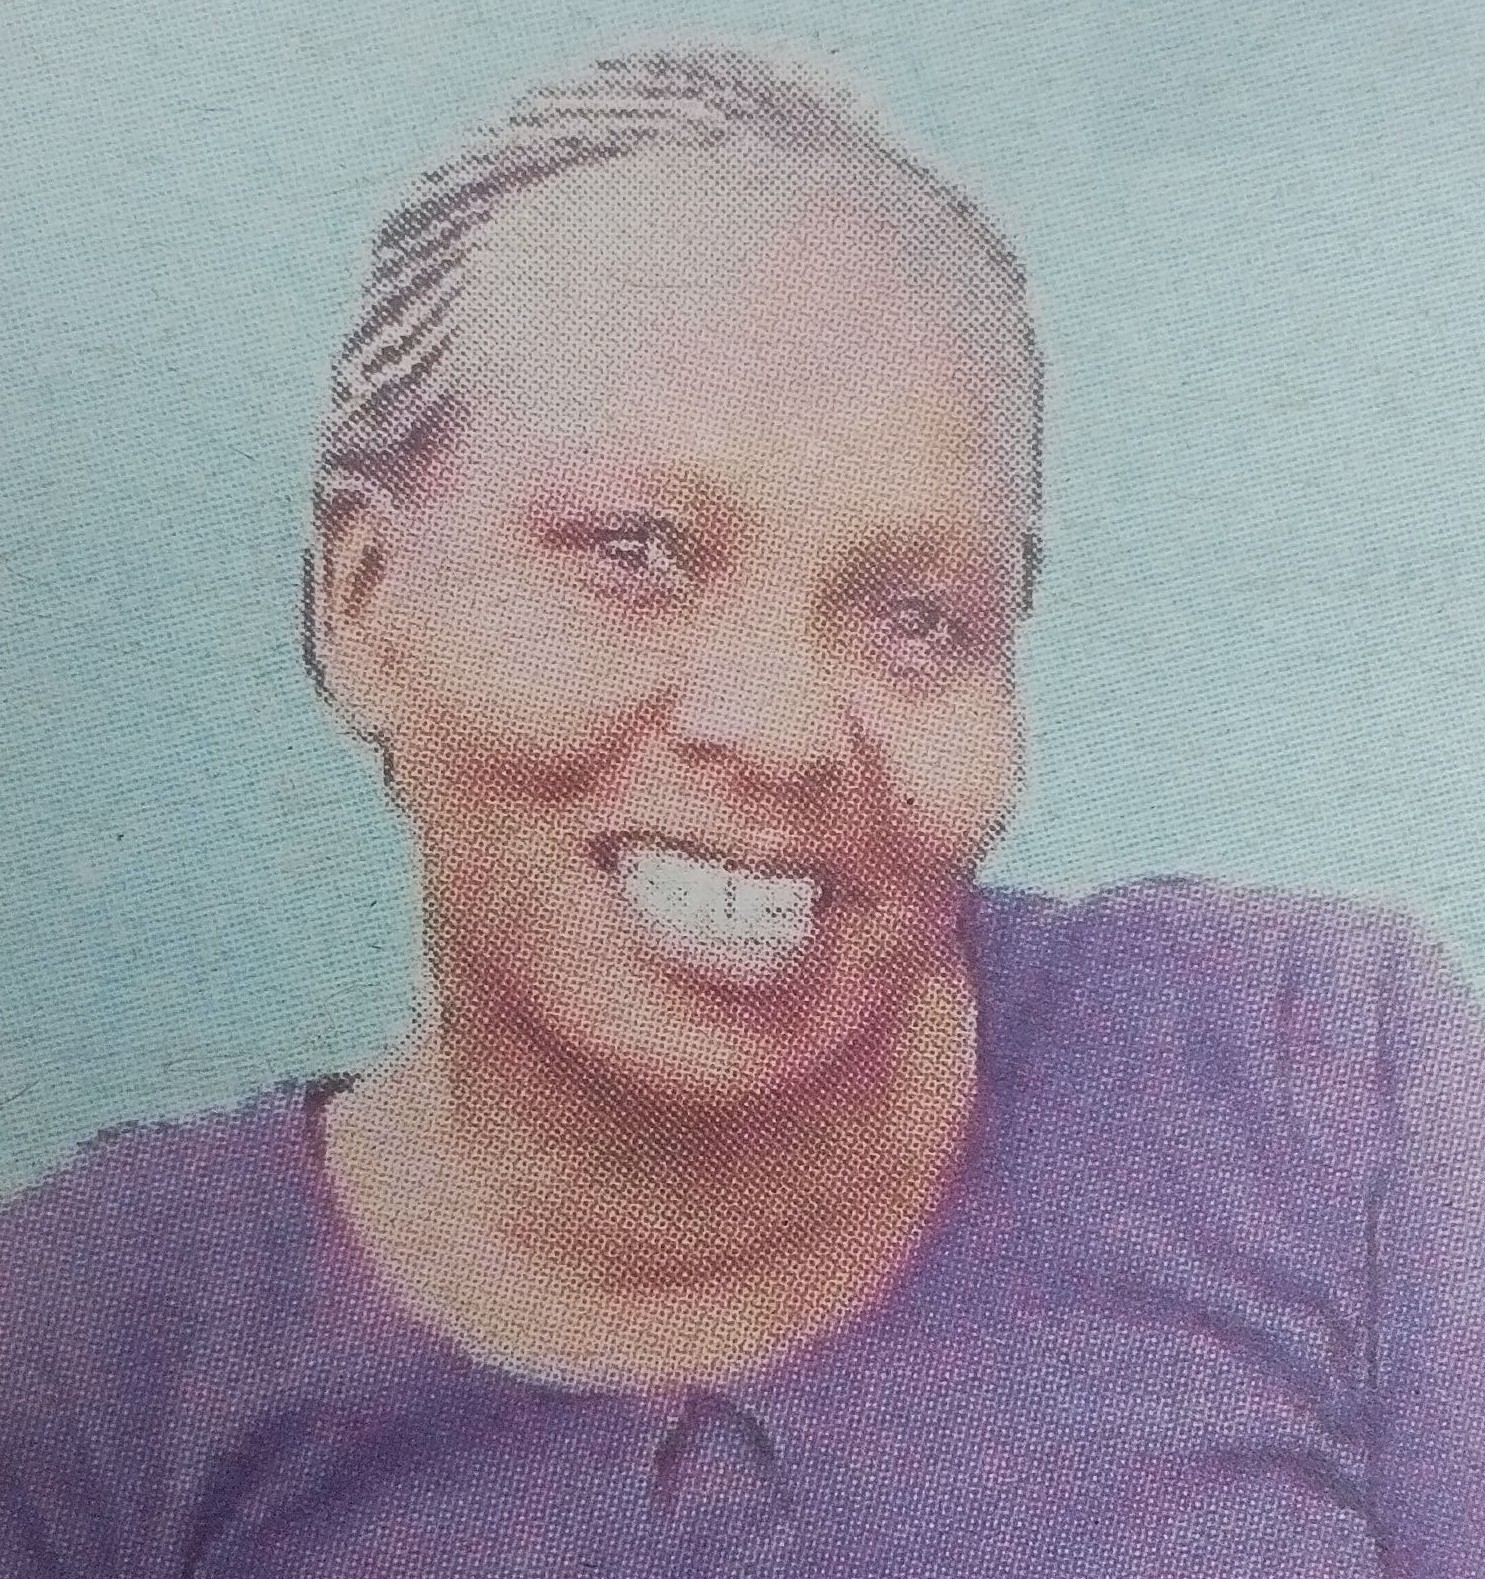 Obituary Image of Alice Theru Kamonjo Nee Muoni